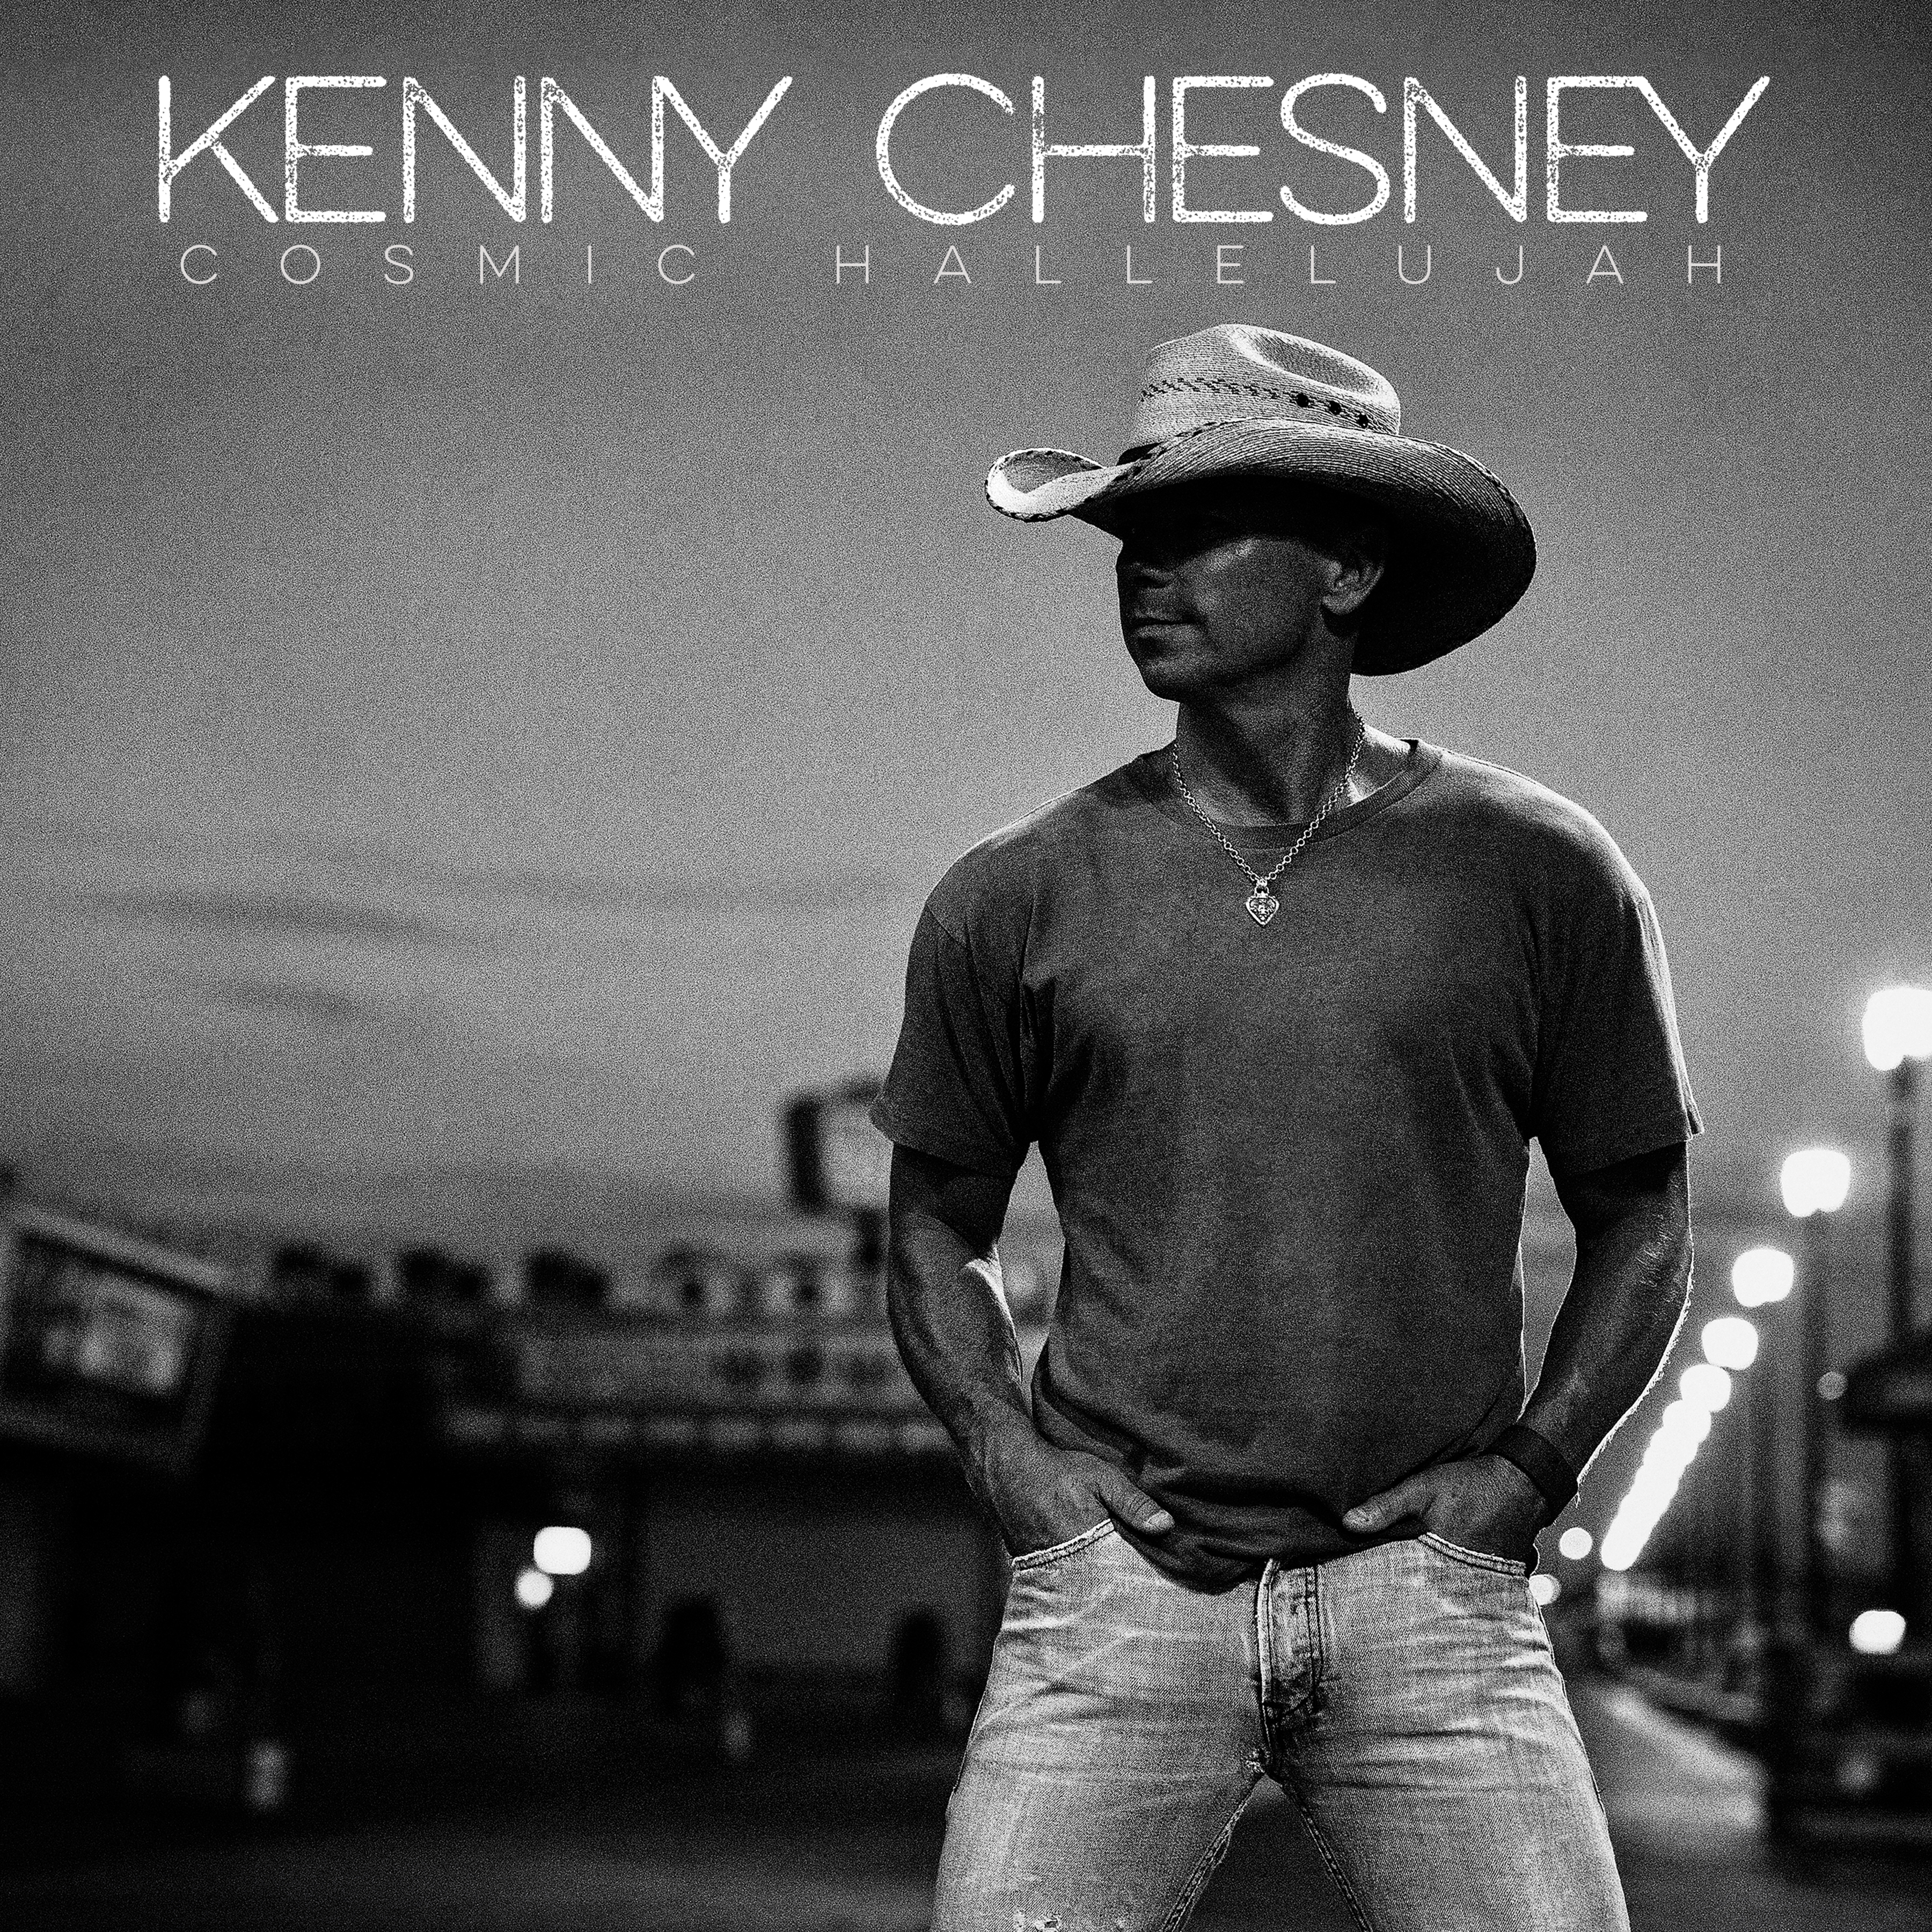 Kenny Chesney Reveals 'Cosmic Hallelujah' Cover Art, Track List ... - Sounds Like Nashville